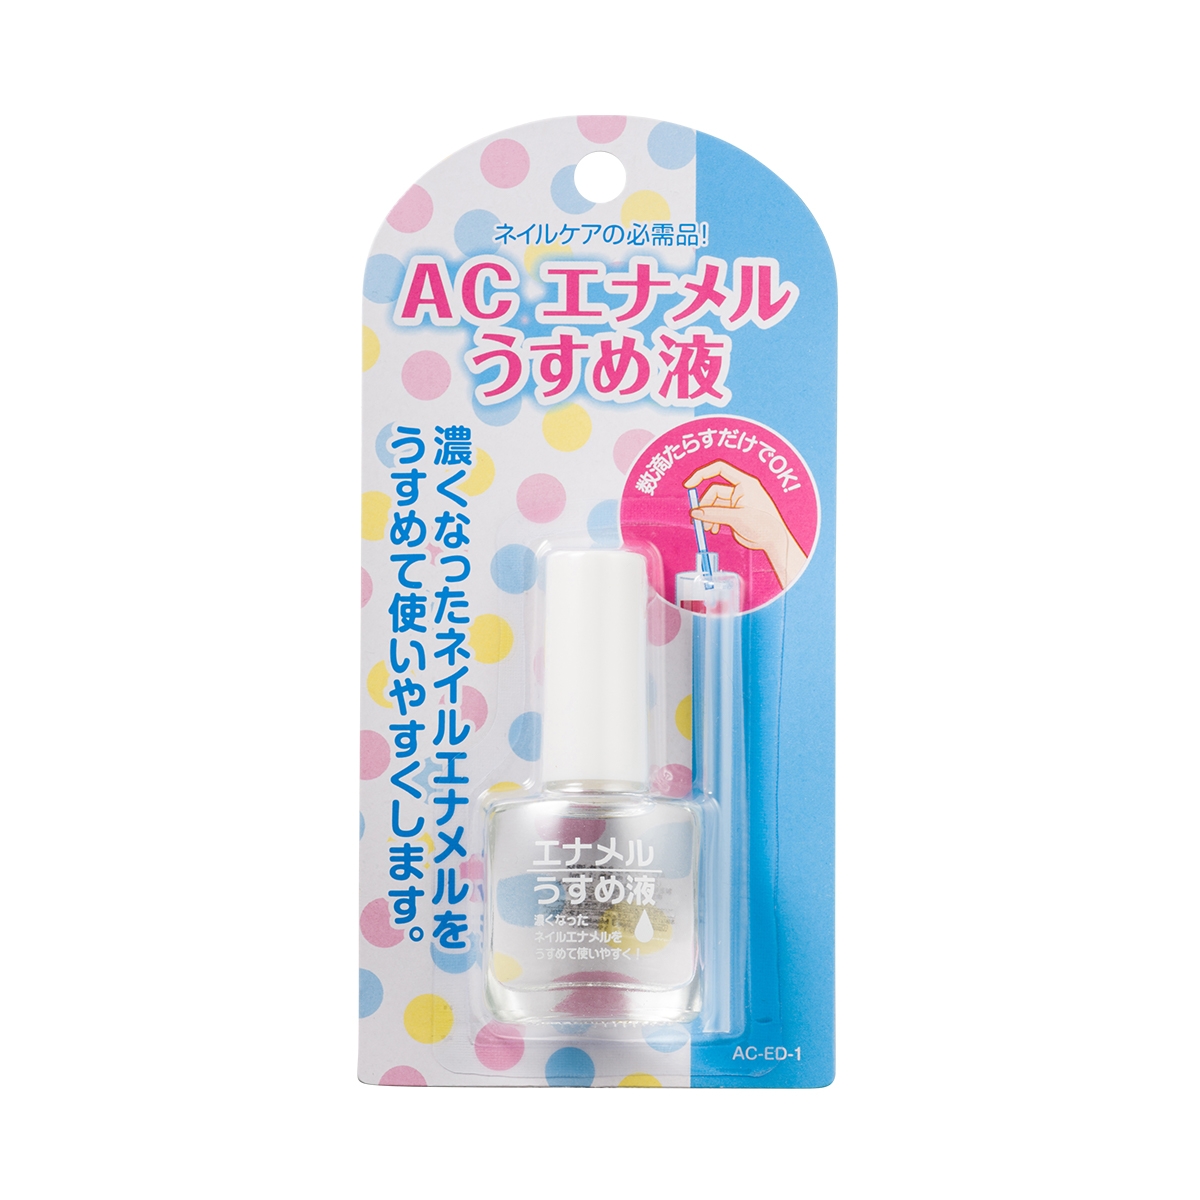 AC MAKEUP TOKYO(エーシーメイクアップトウキョウ) エナメルうすめ液の商品画像2 